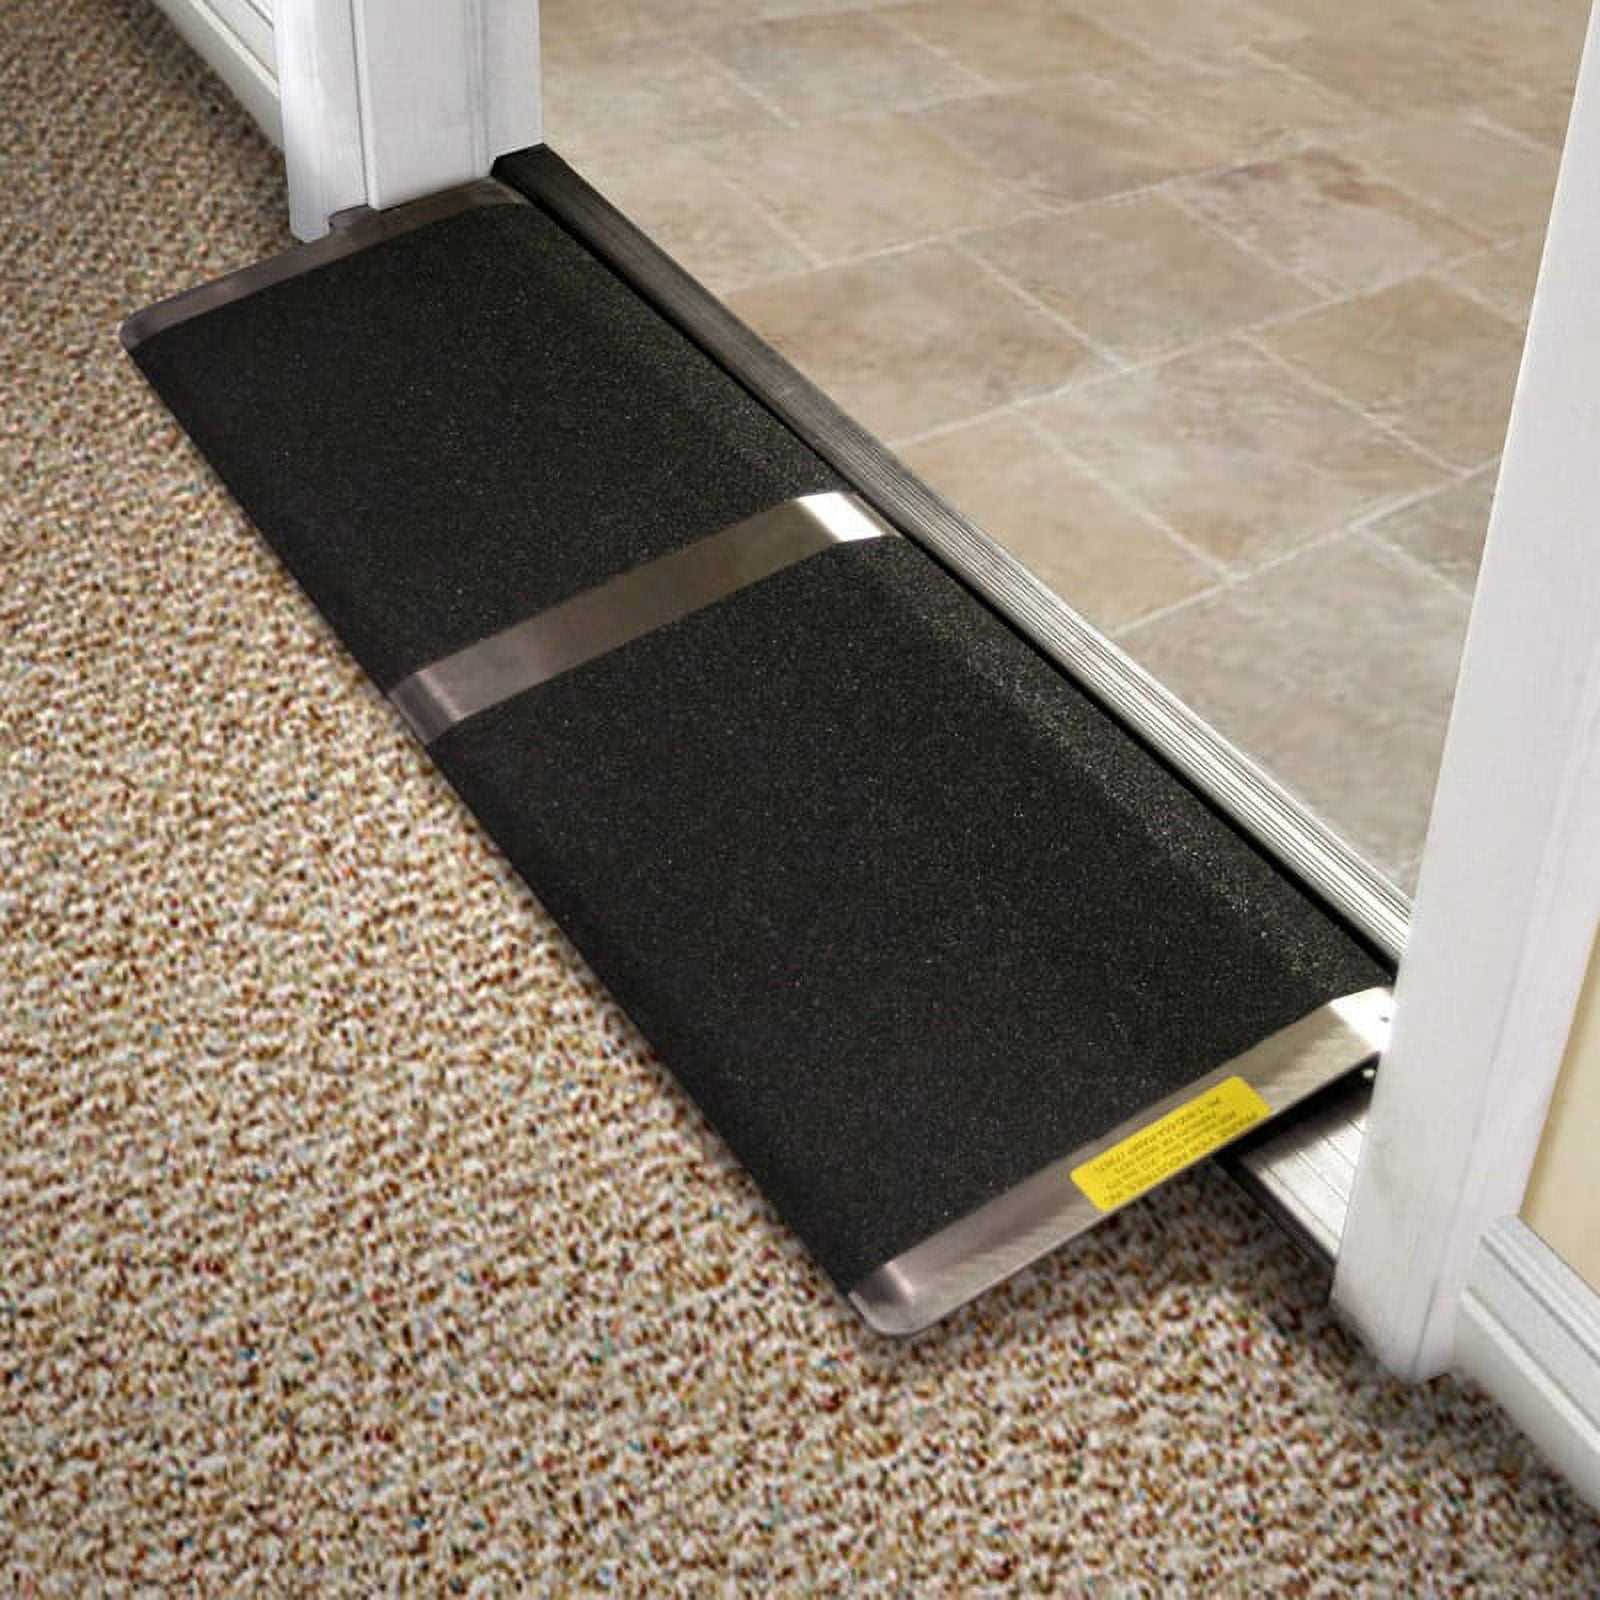 EZAccess TRANSITIONS 2-1/2 inch Angled Entry Mat :: portable, anti-slip  ramp for sliding doors